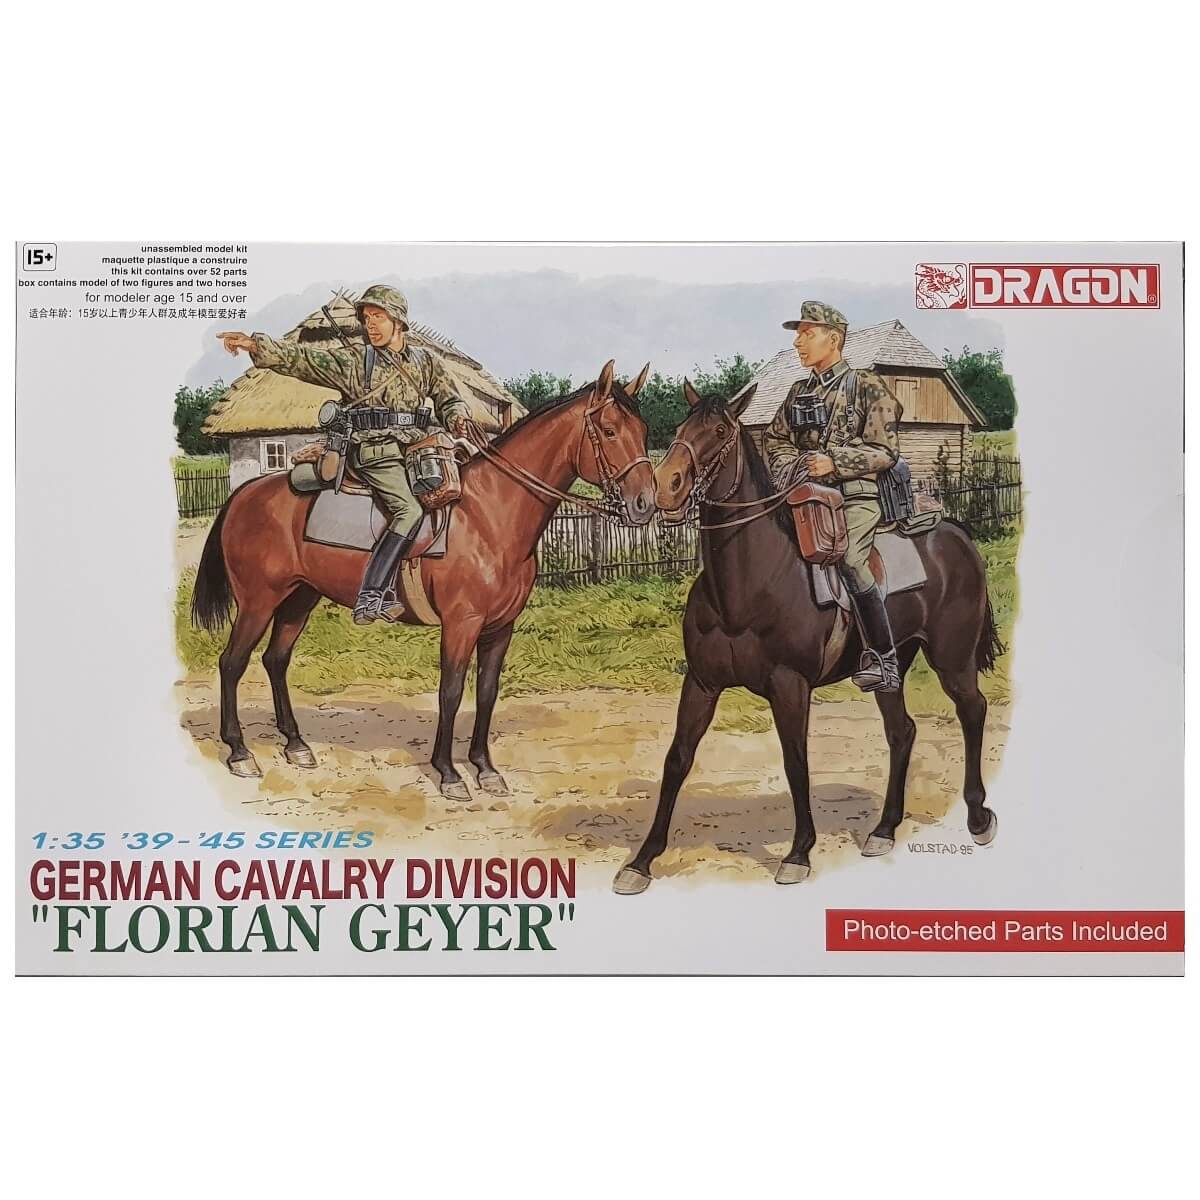 1:35 German Cavalry Division - Florian Geyer - DRAGON